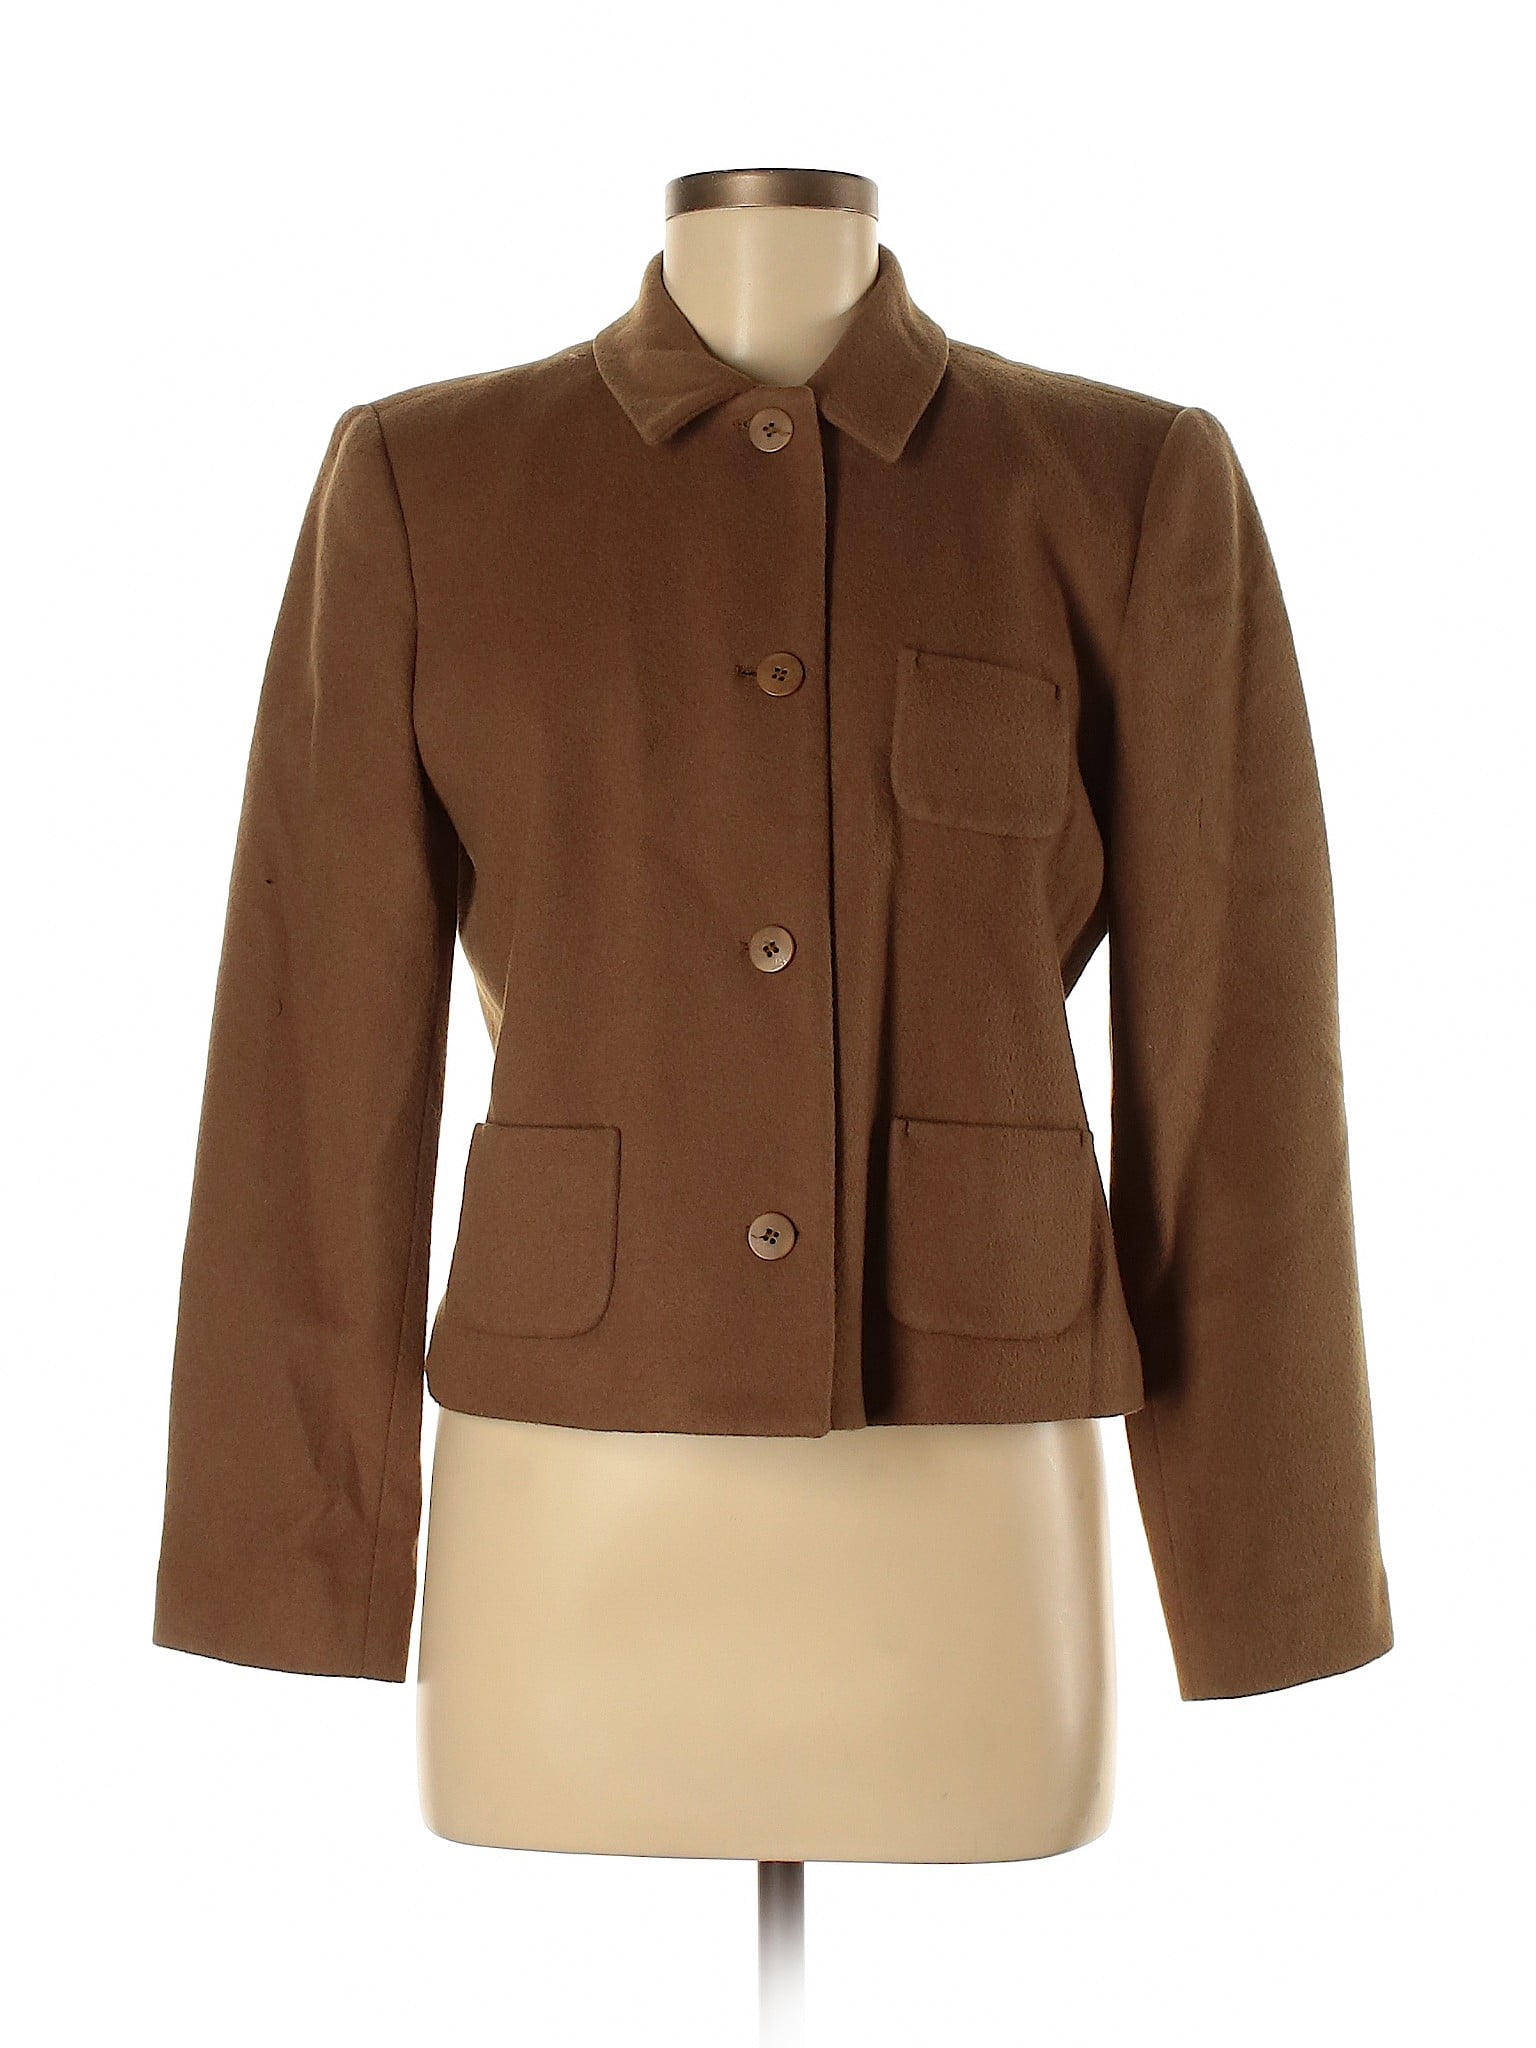 Harve Benard - Pre-Owned Harve Benard Women's Size 8 Wool Blazer ...